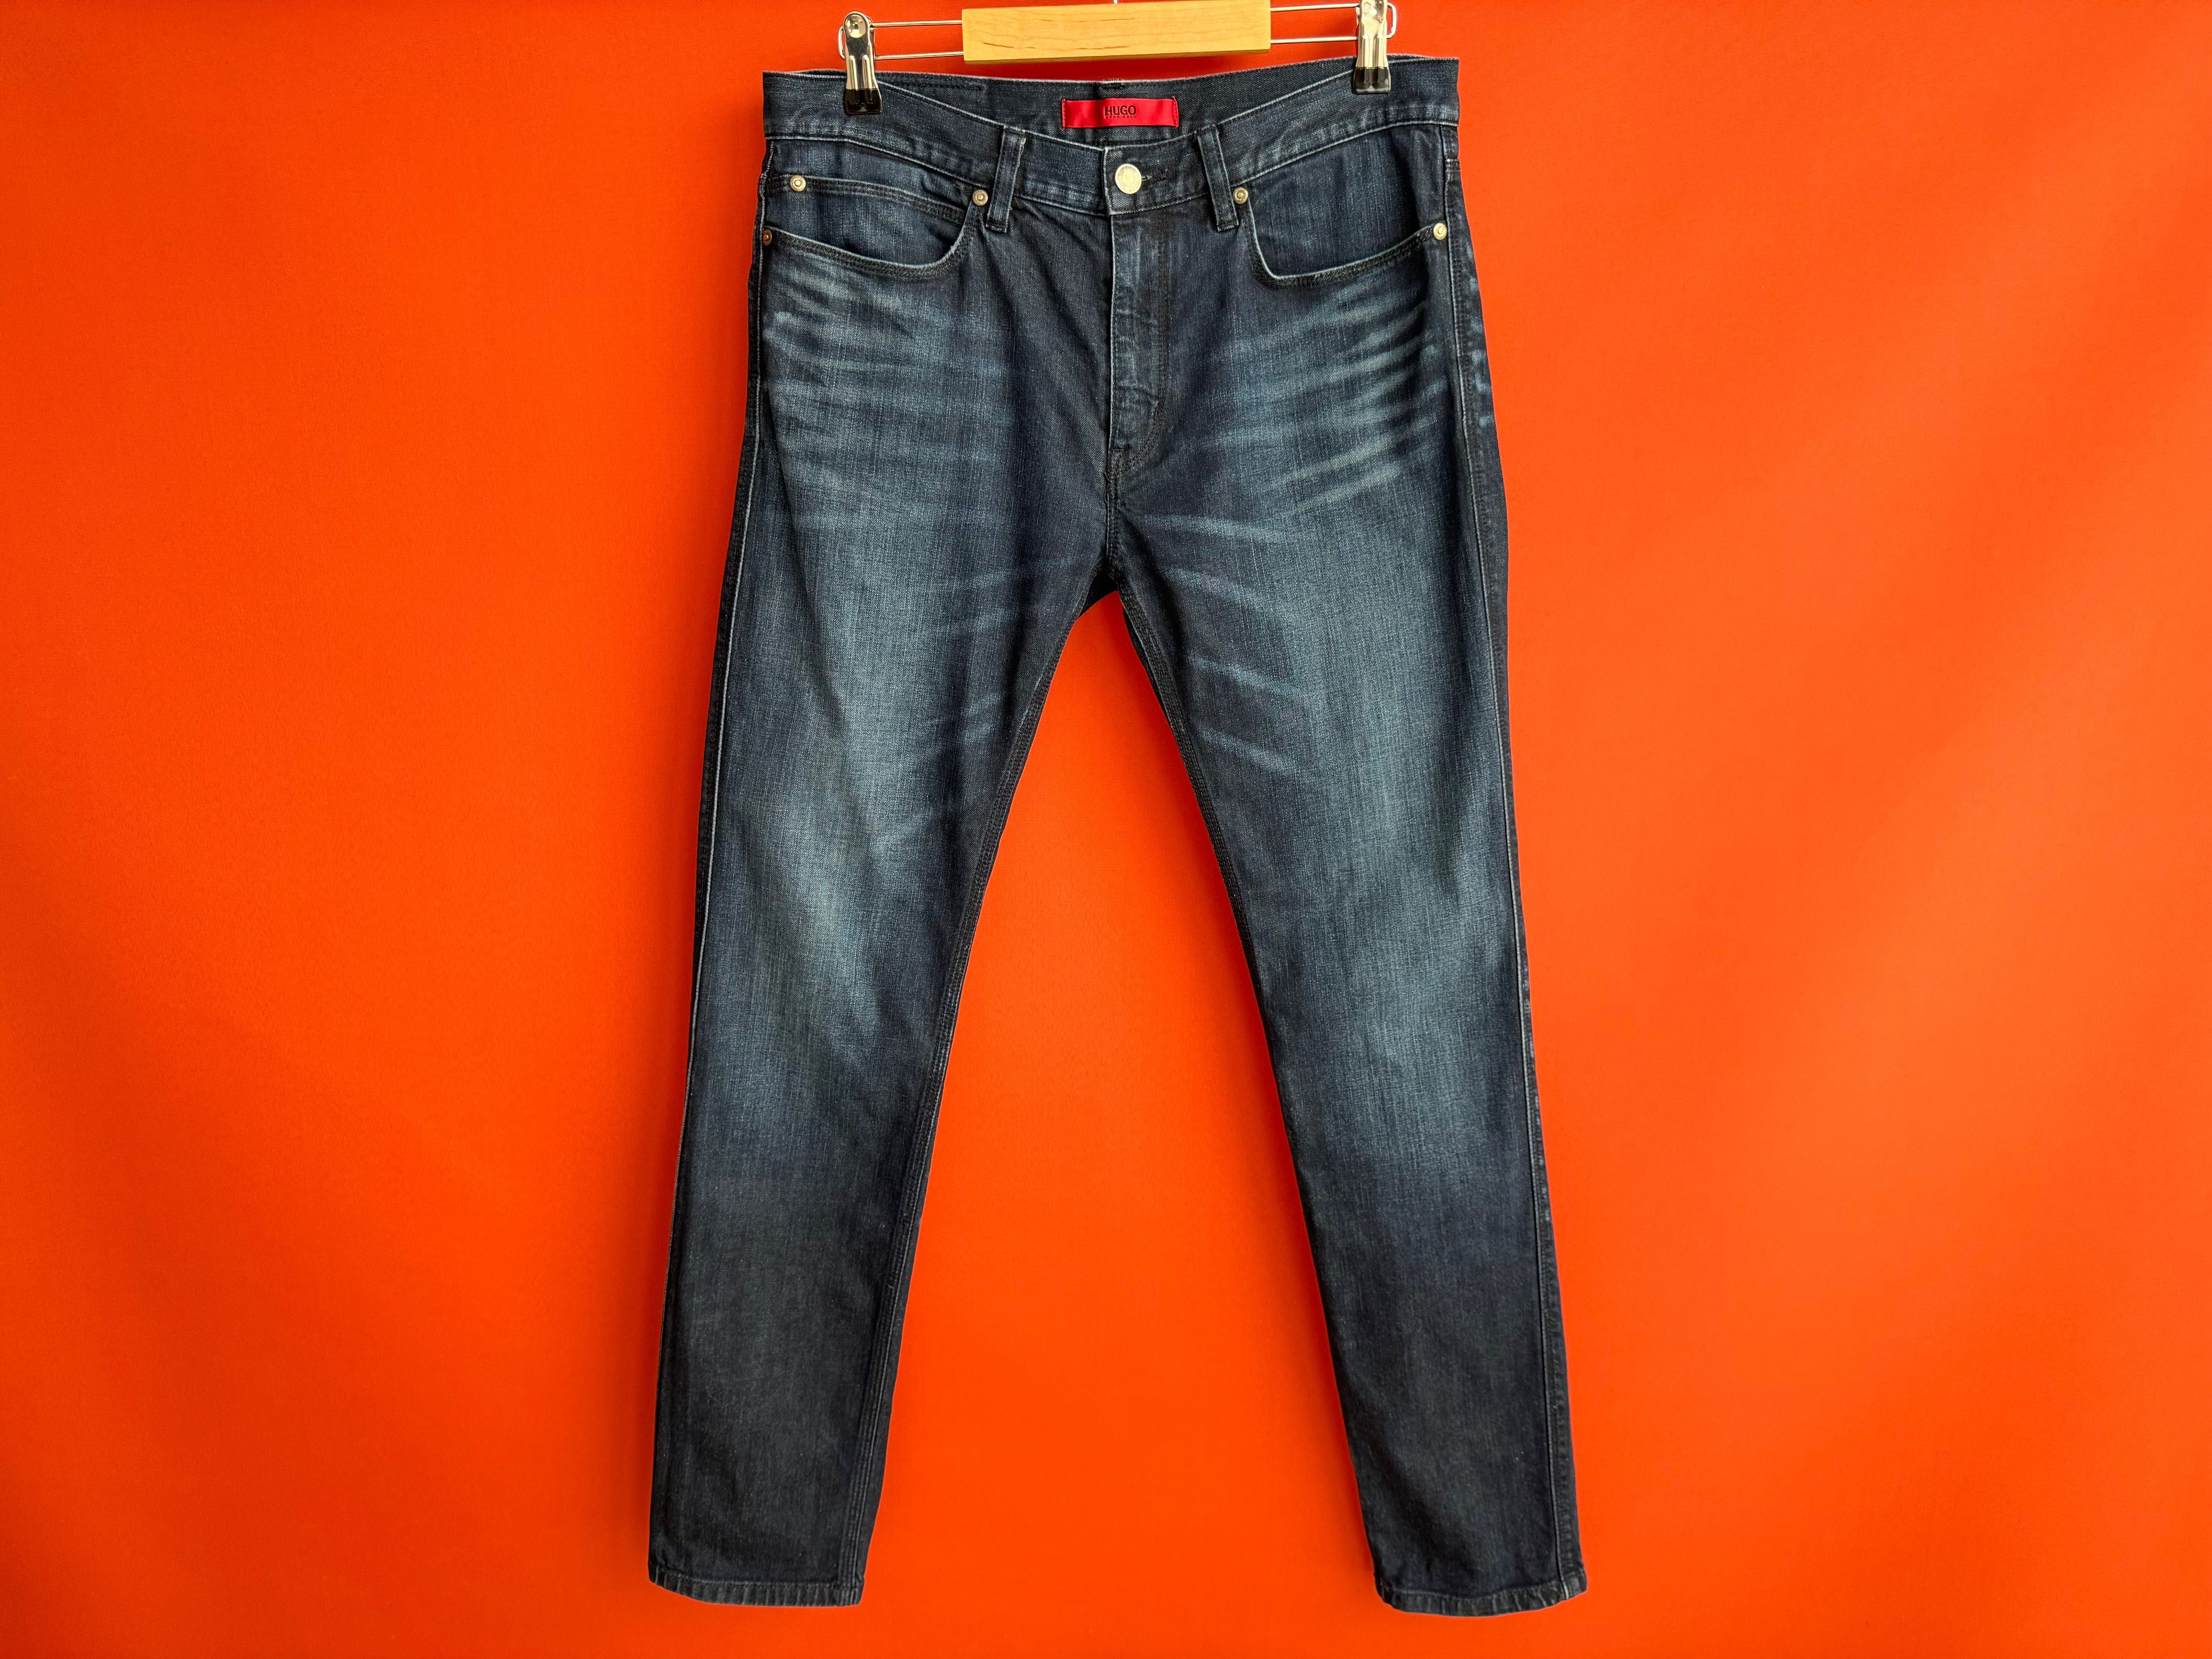 Hugo Boss оригинал мужские джинсы штаны размер 32 Б У